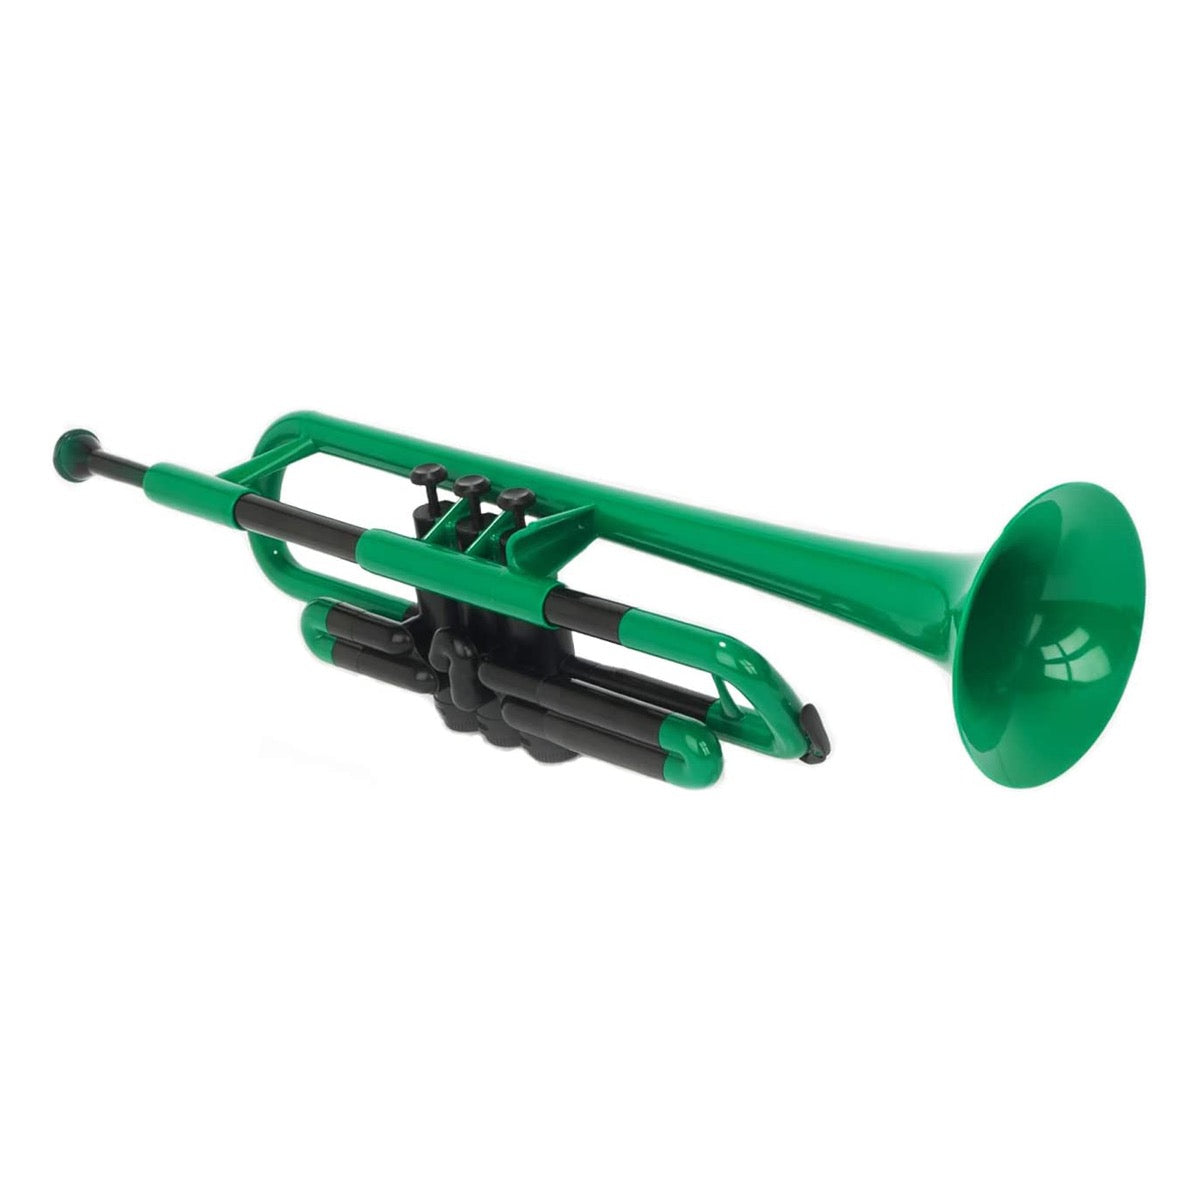 Jiggs pTrumpet Plastic Trumpet 2.0 - Green